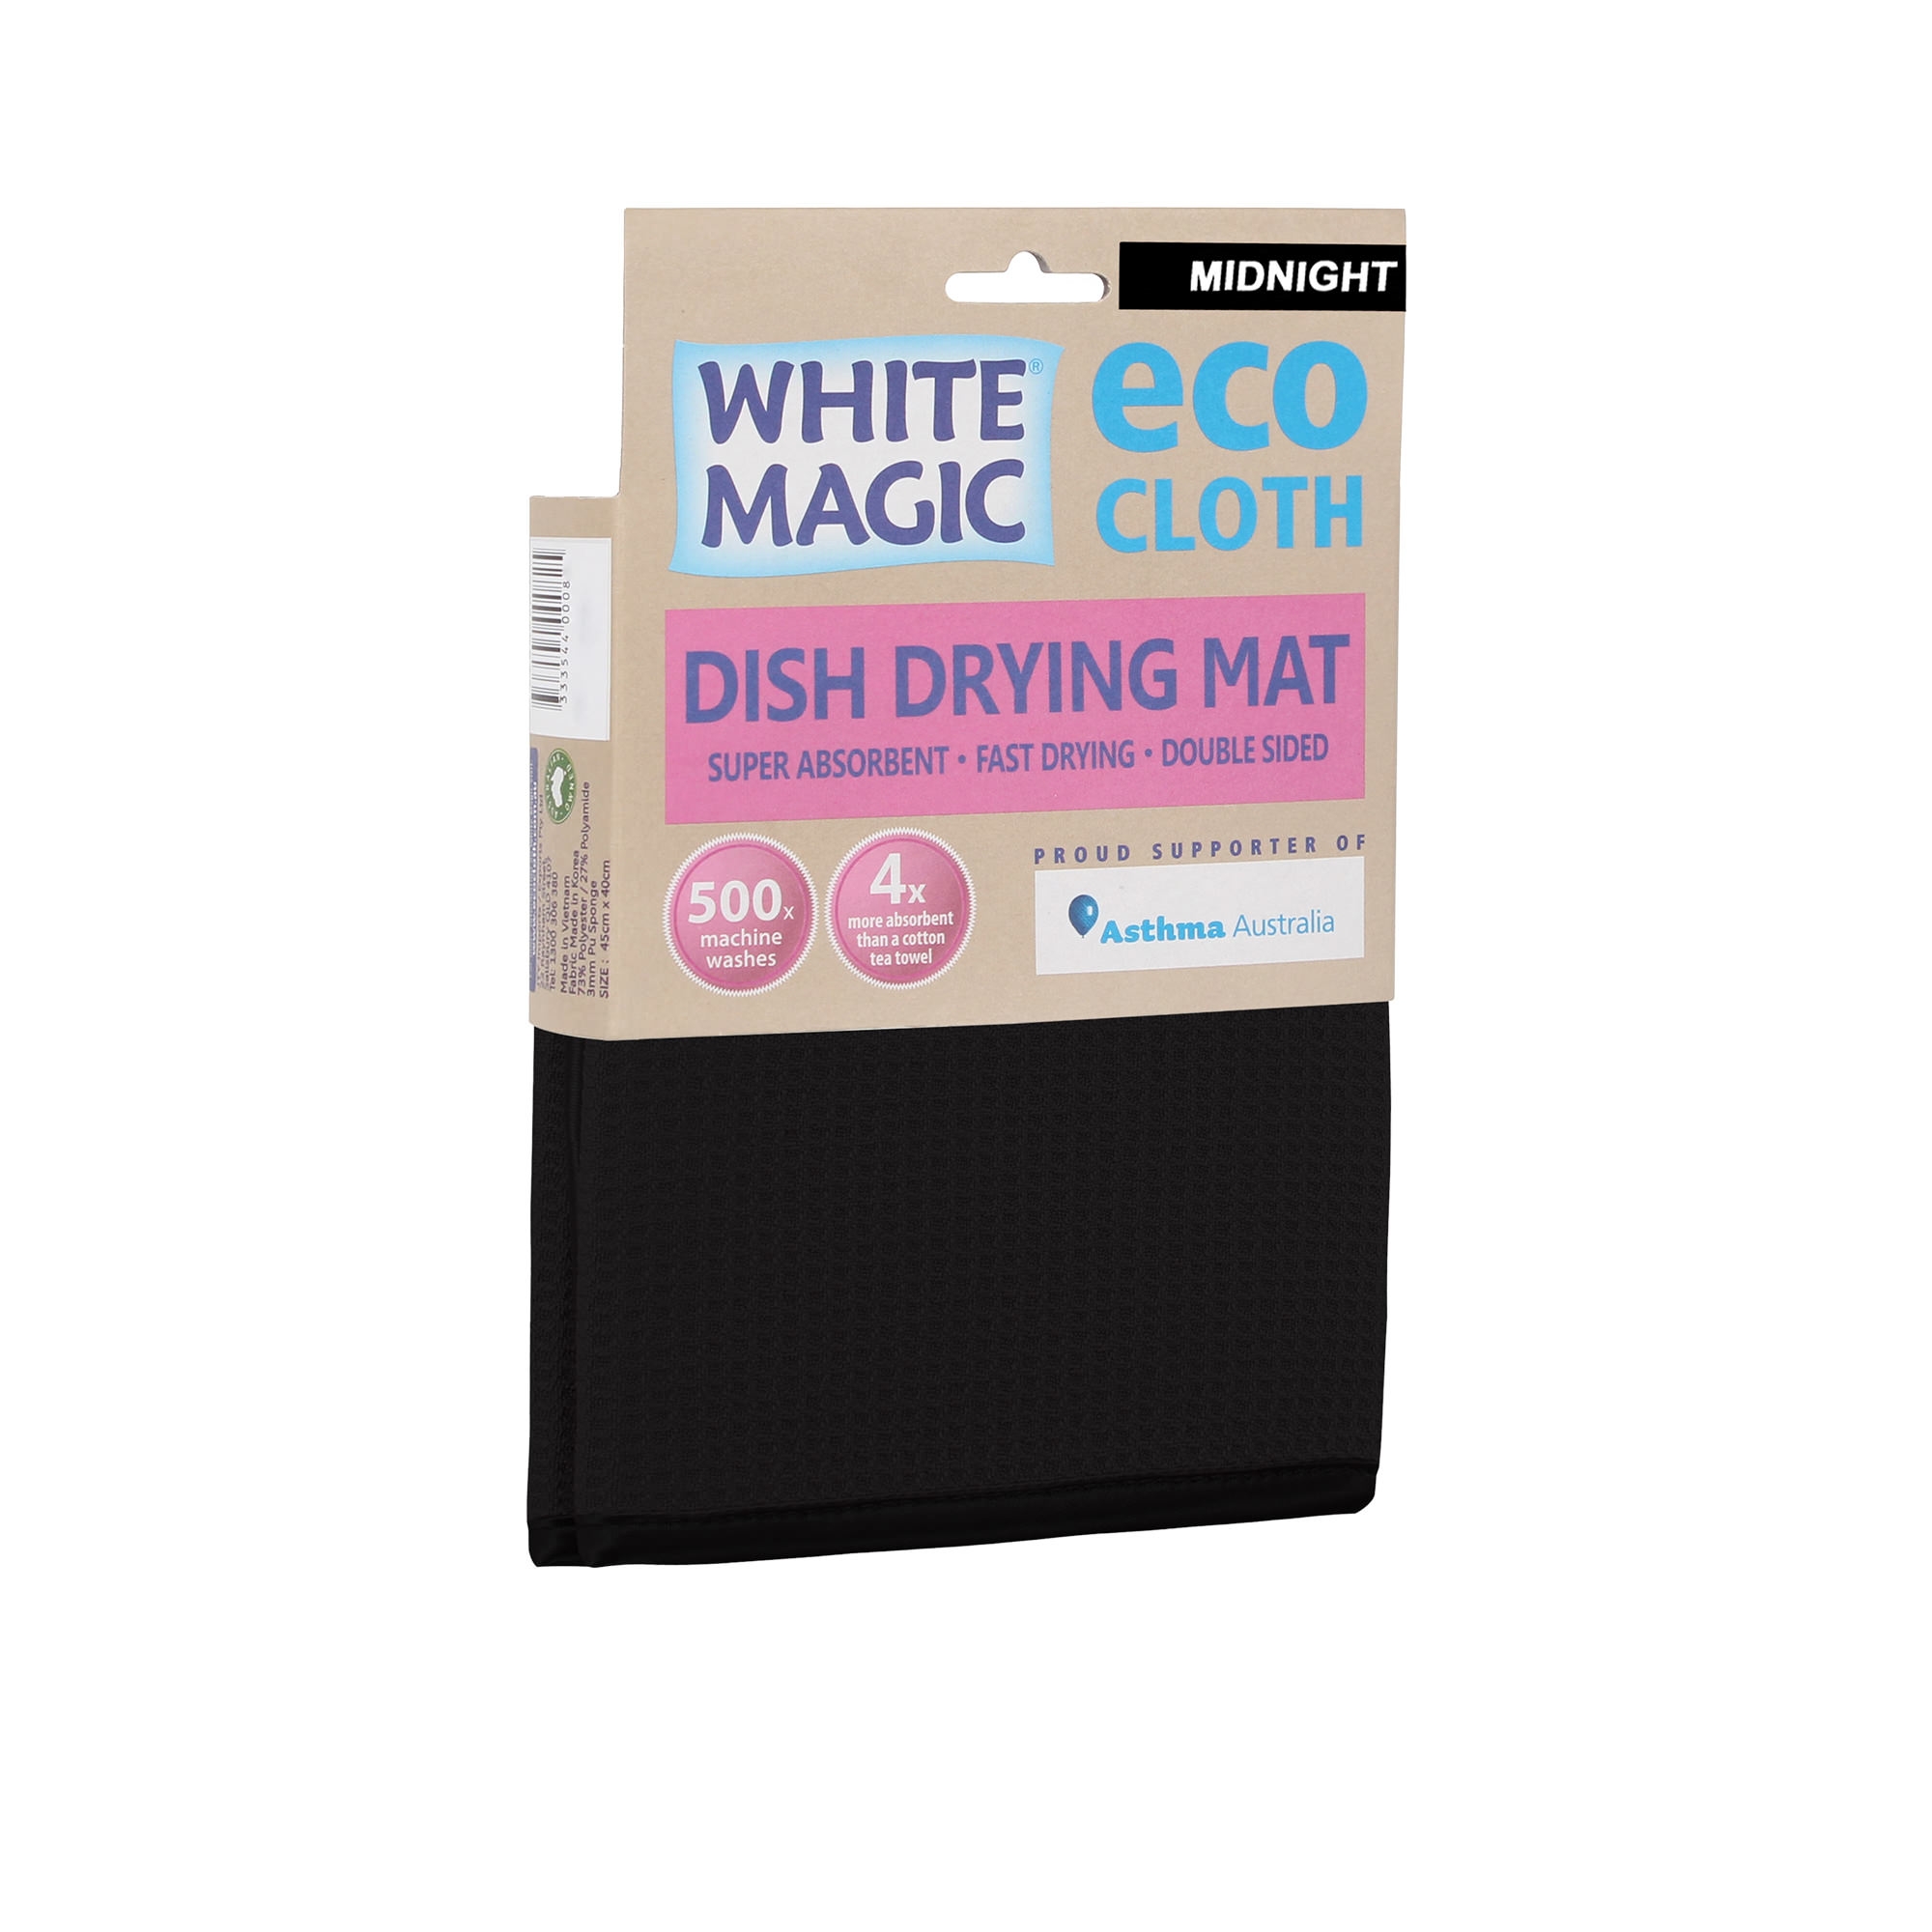 White Magic Eco Cloth Dish Drying Mat Midnight Image 2